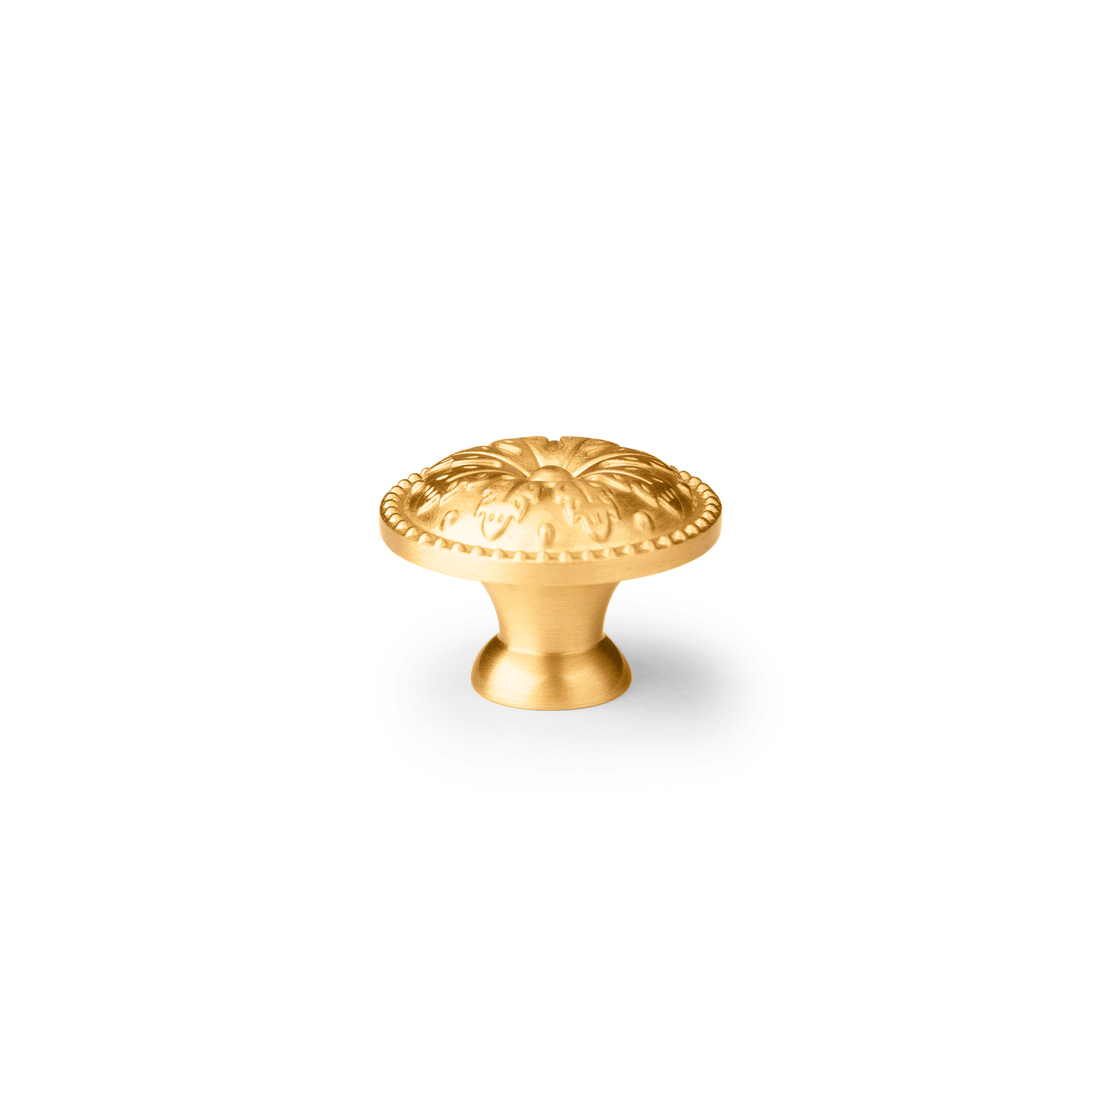 Sovereign Knob Knob 30mm / Gold / Brass - M A N T A R A